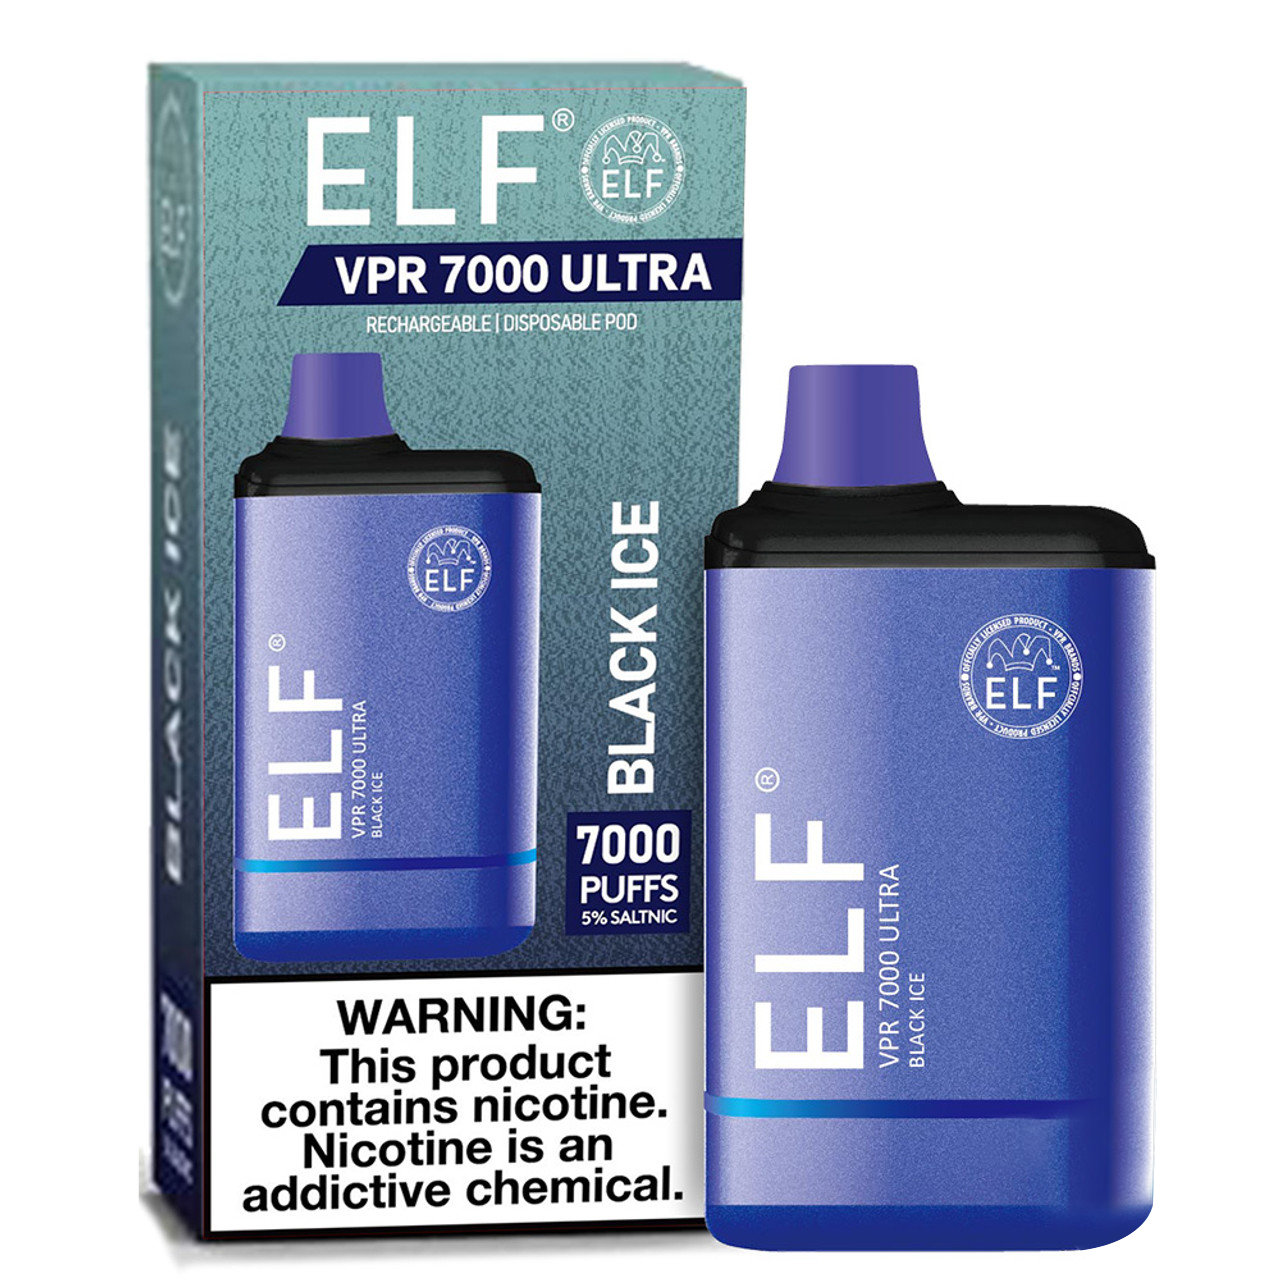 ELF VPR ULTRA 7000 PUFFS DISPOSABLE 7K 5% - Black ice